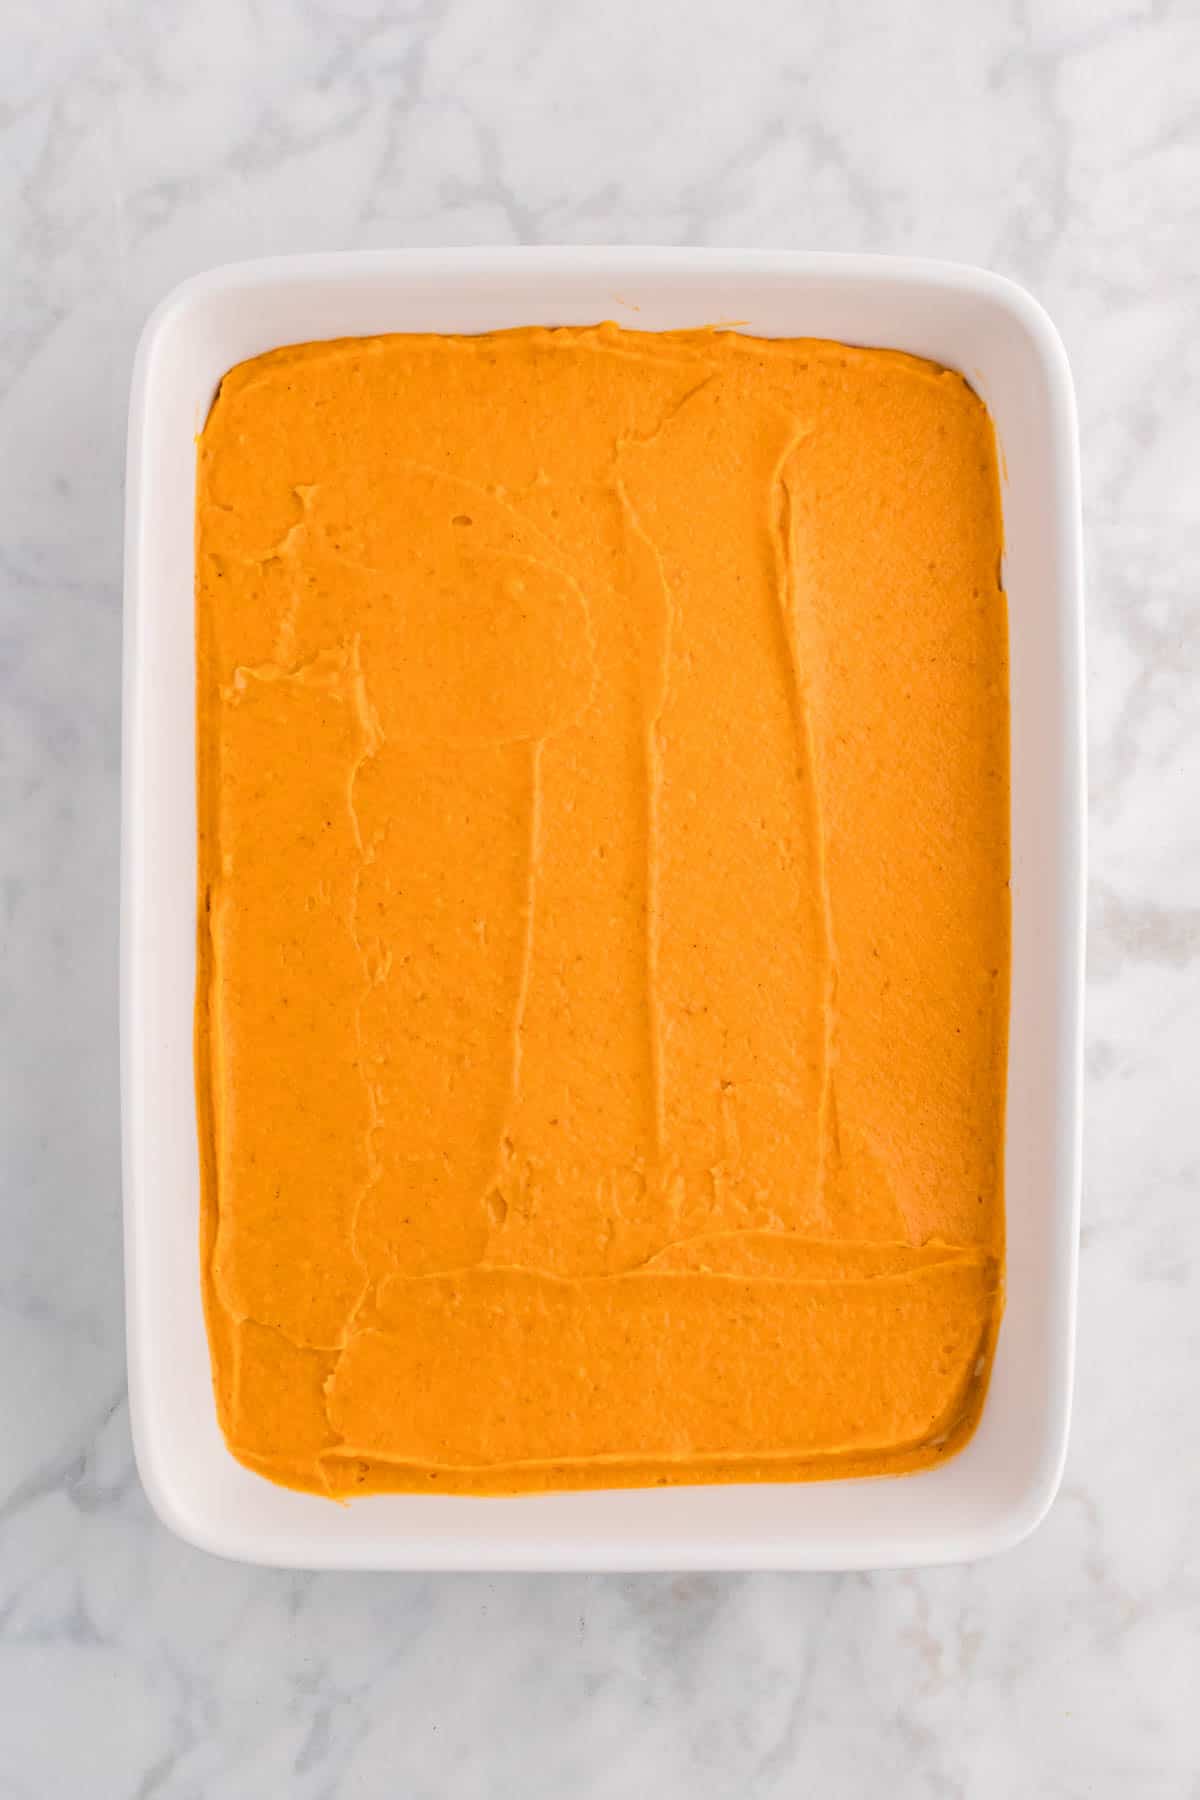 pumpkin pudding layer in a baking dish